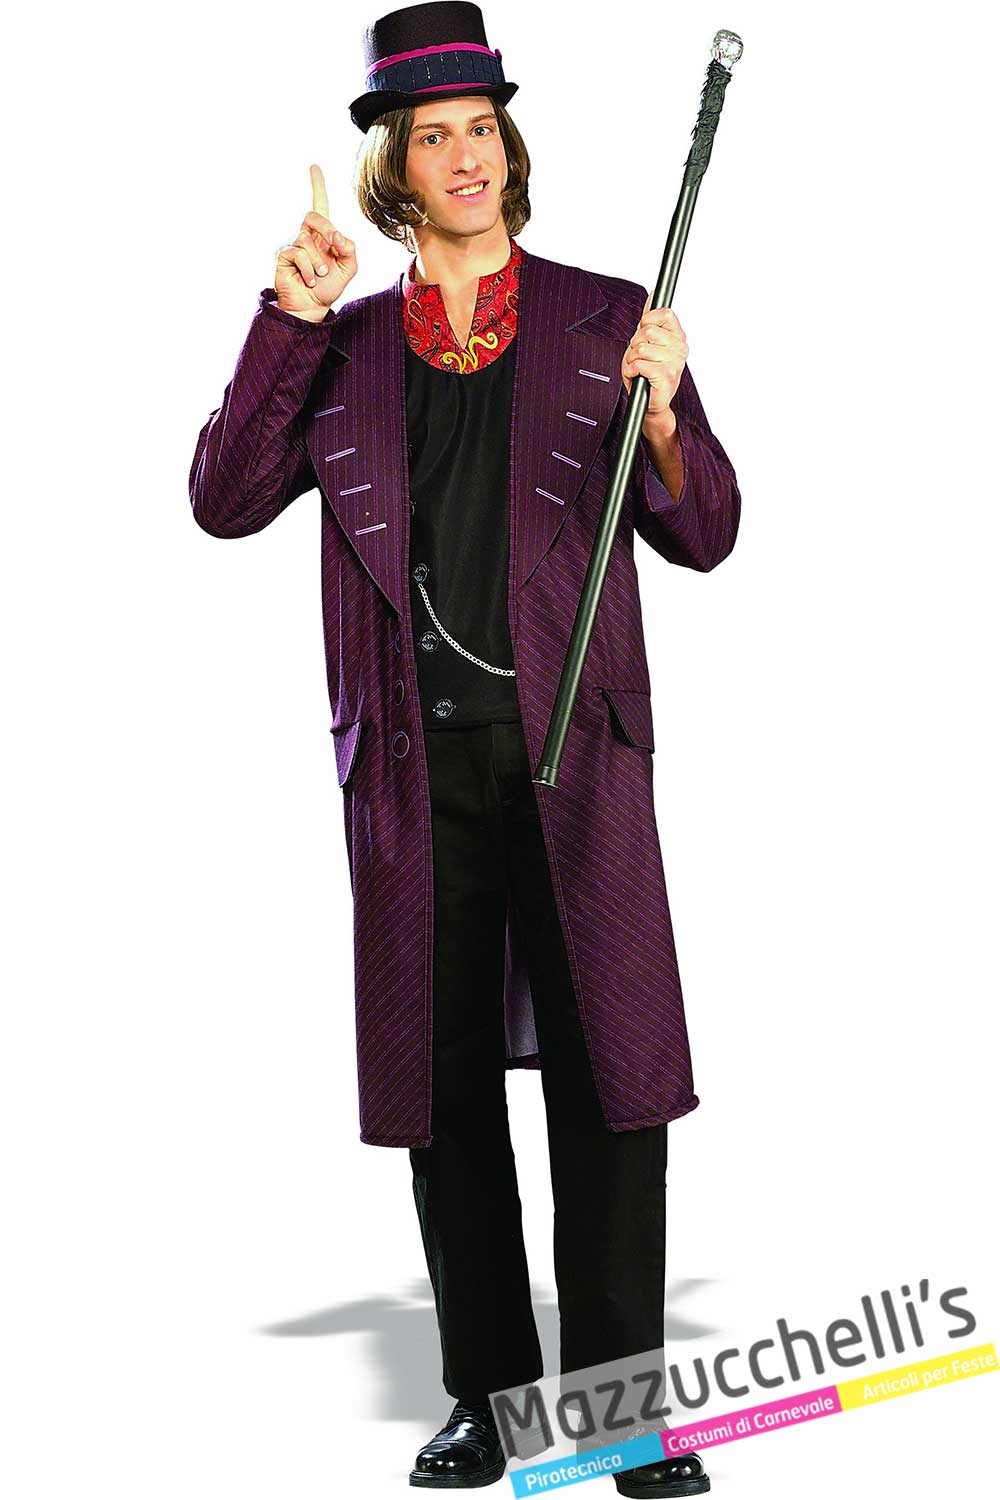 Costume Willy Wonka in vendita a Samarate Varese da Mazzucchellis